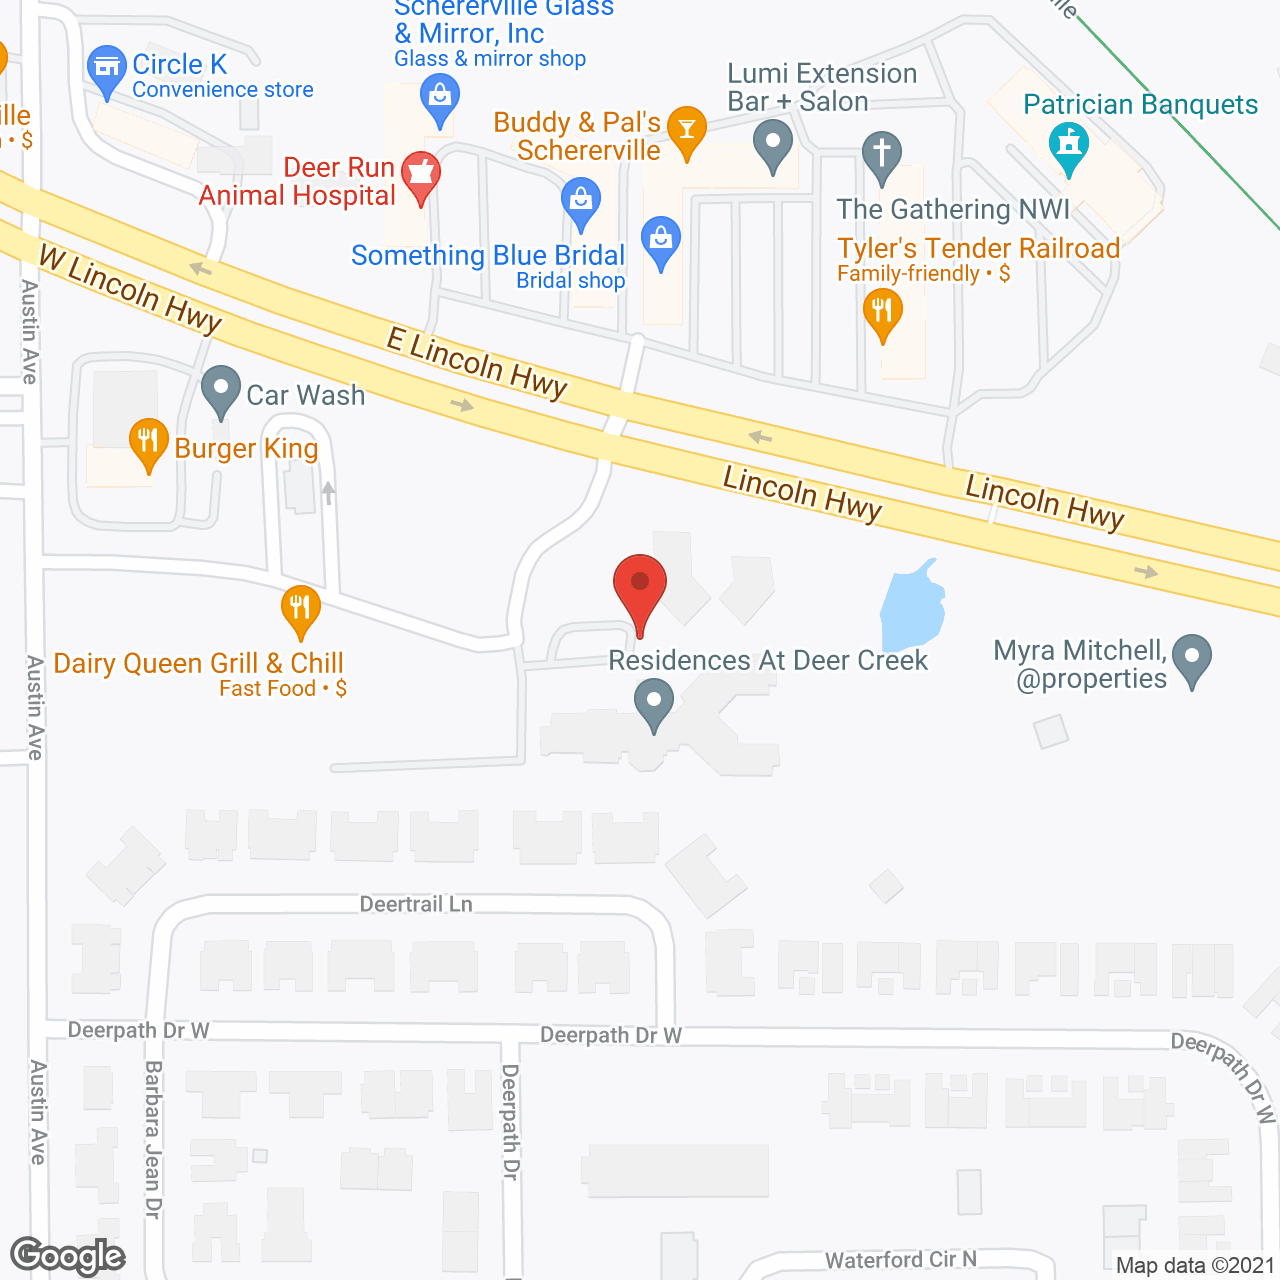 Residences at Deer Creek in google map